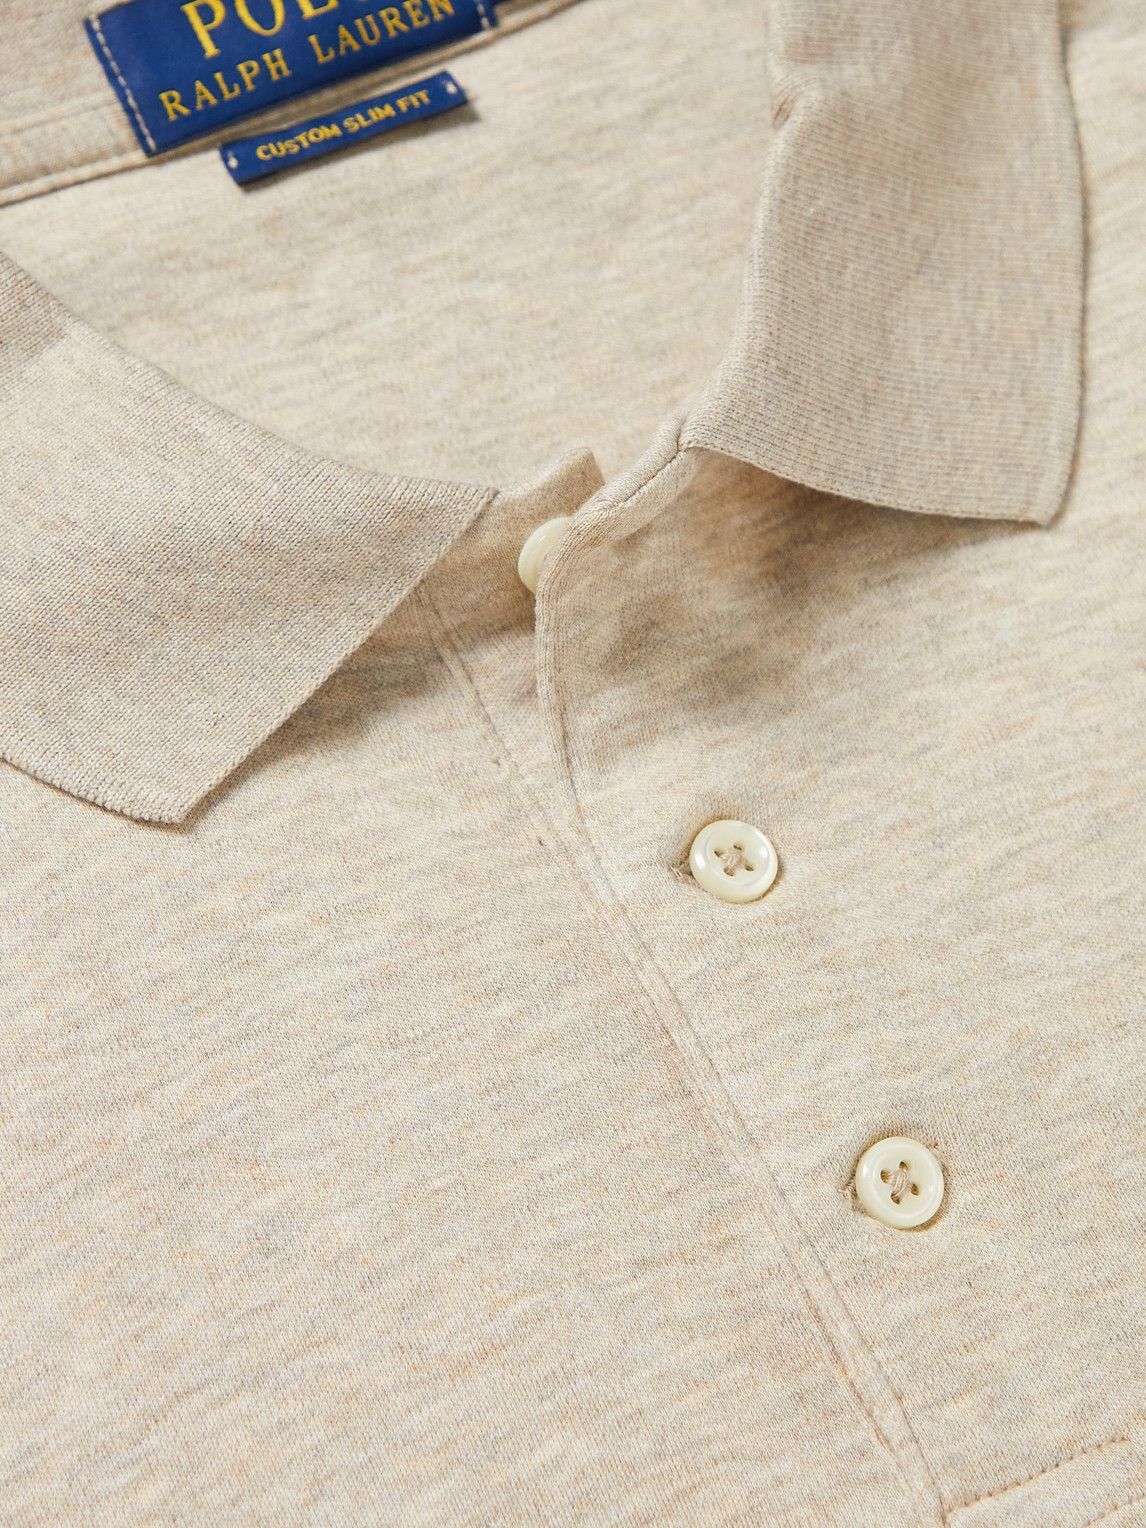 Polo Ralph Lauren - Logo-Embroidered Cotton-Jersey Polo Shirt - Neutrals